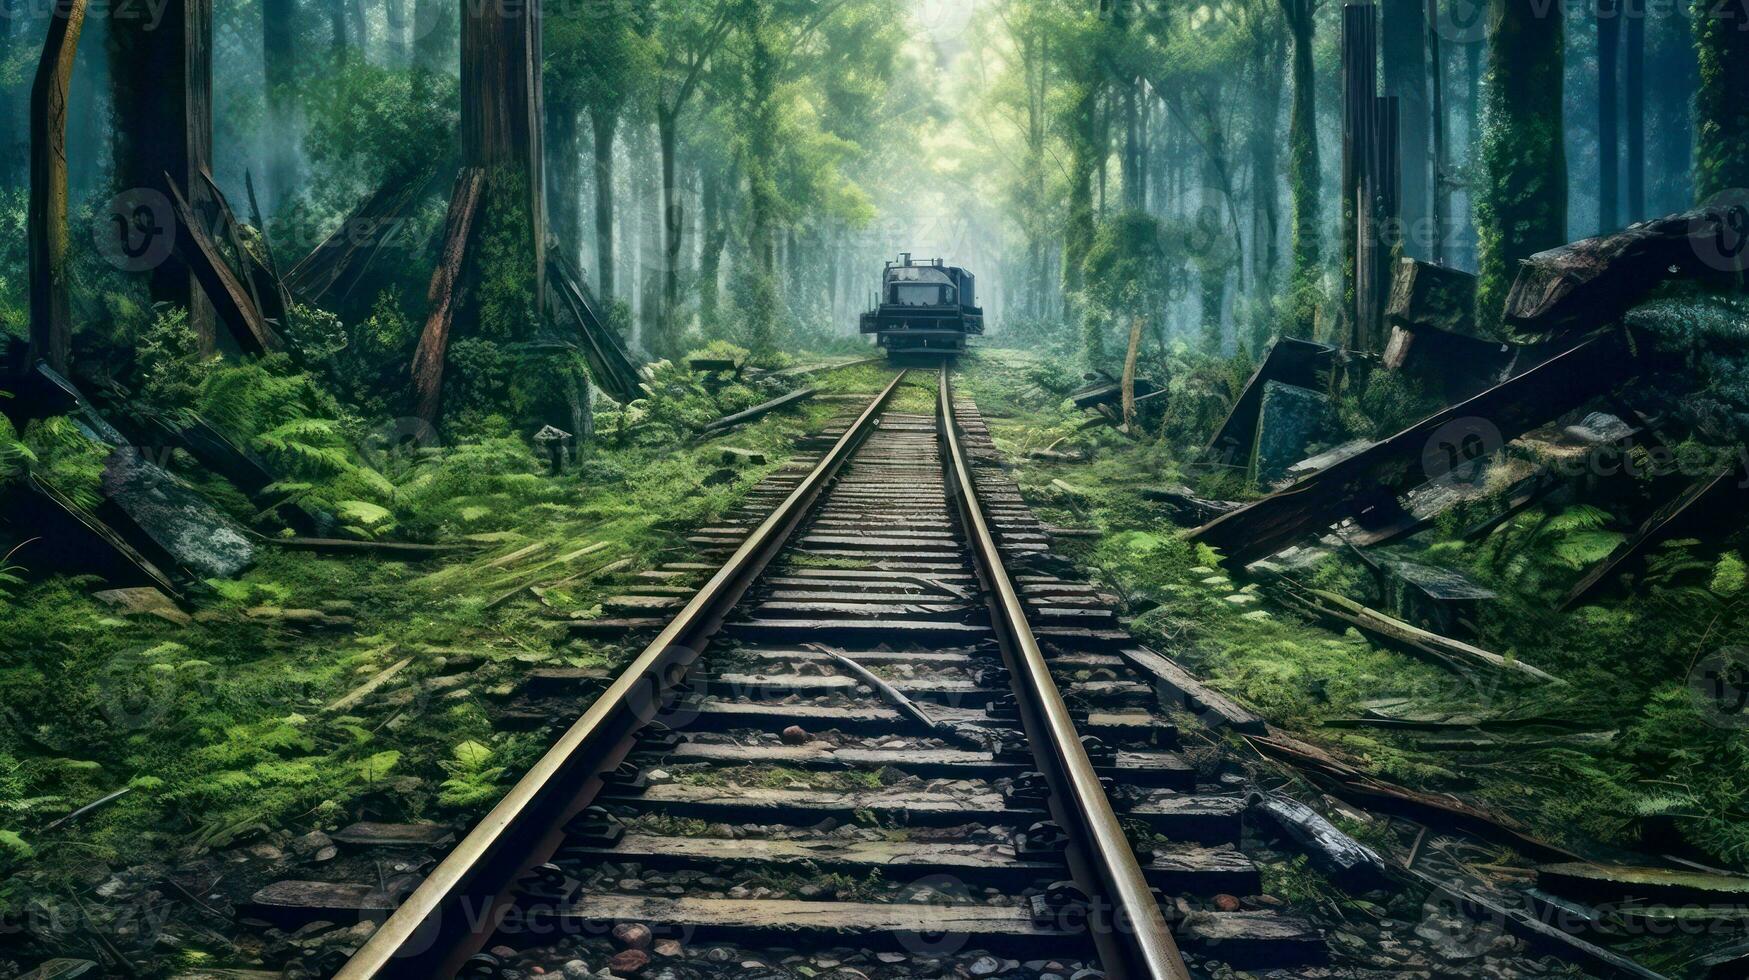 estrada de ferro dentro a nebuloso floresta, vintage estilo, viagem conceito foto